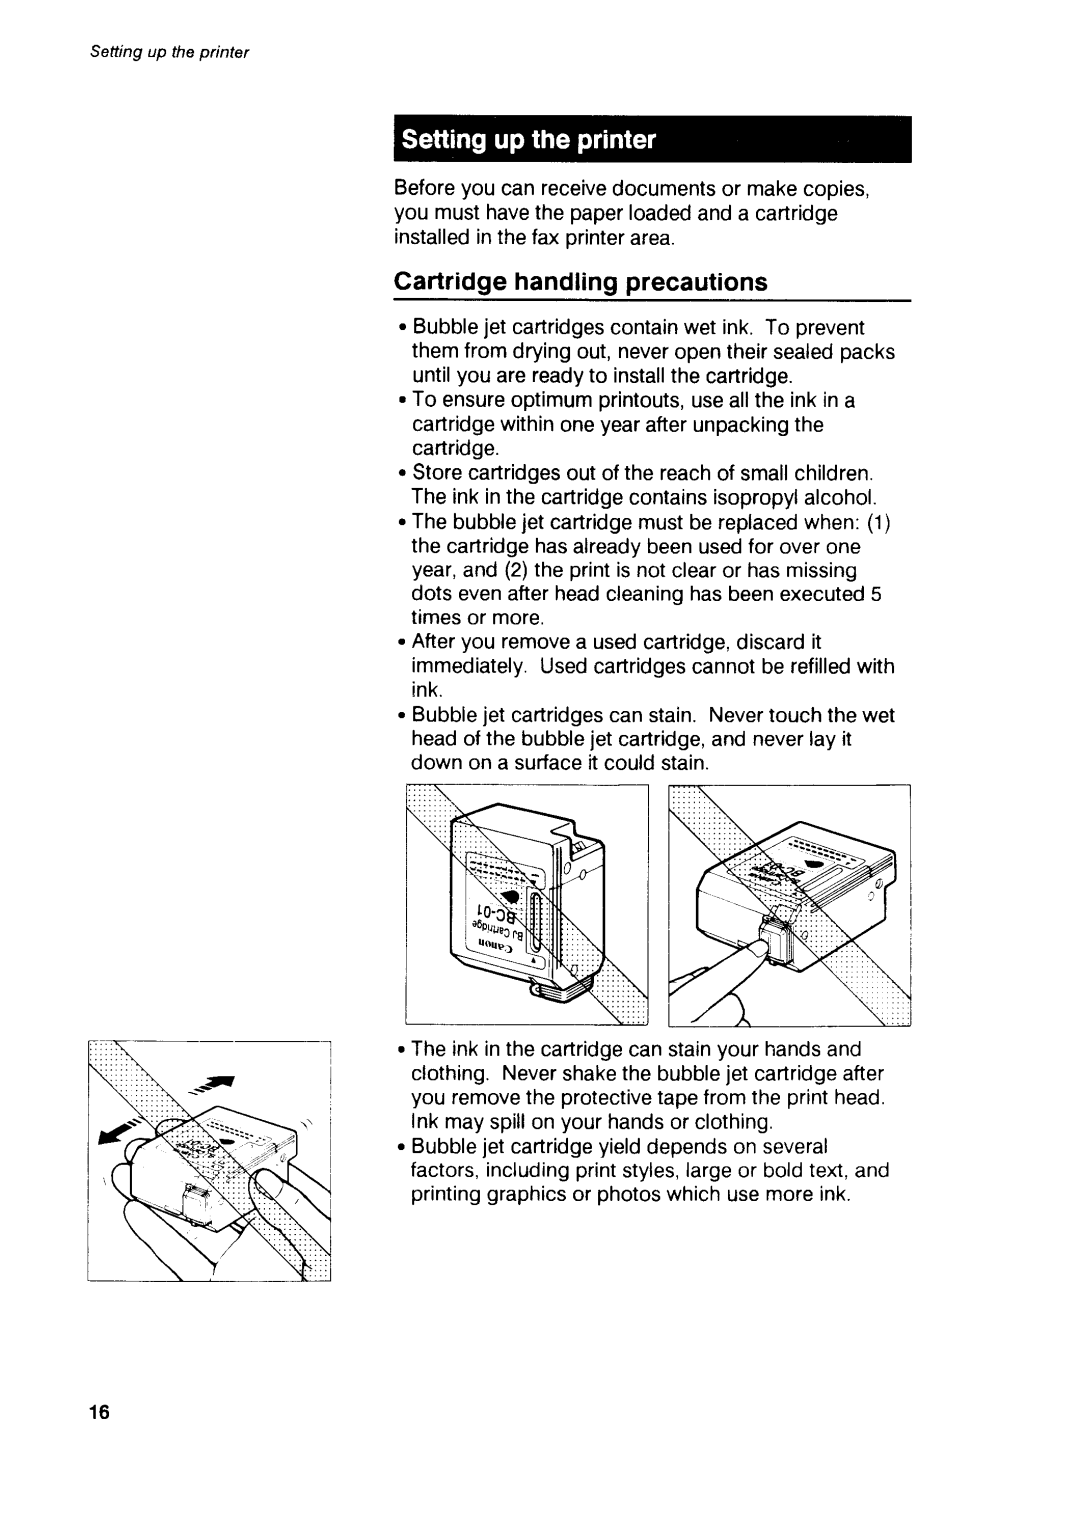 Canon B75 manual Cartridgehandlingprecautions, Setting up the printer 